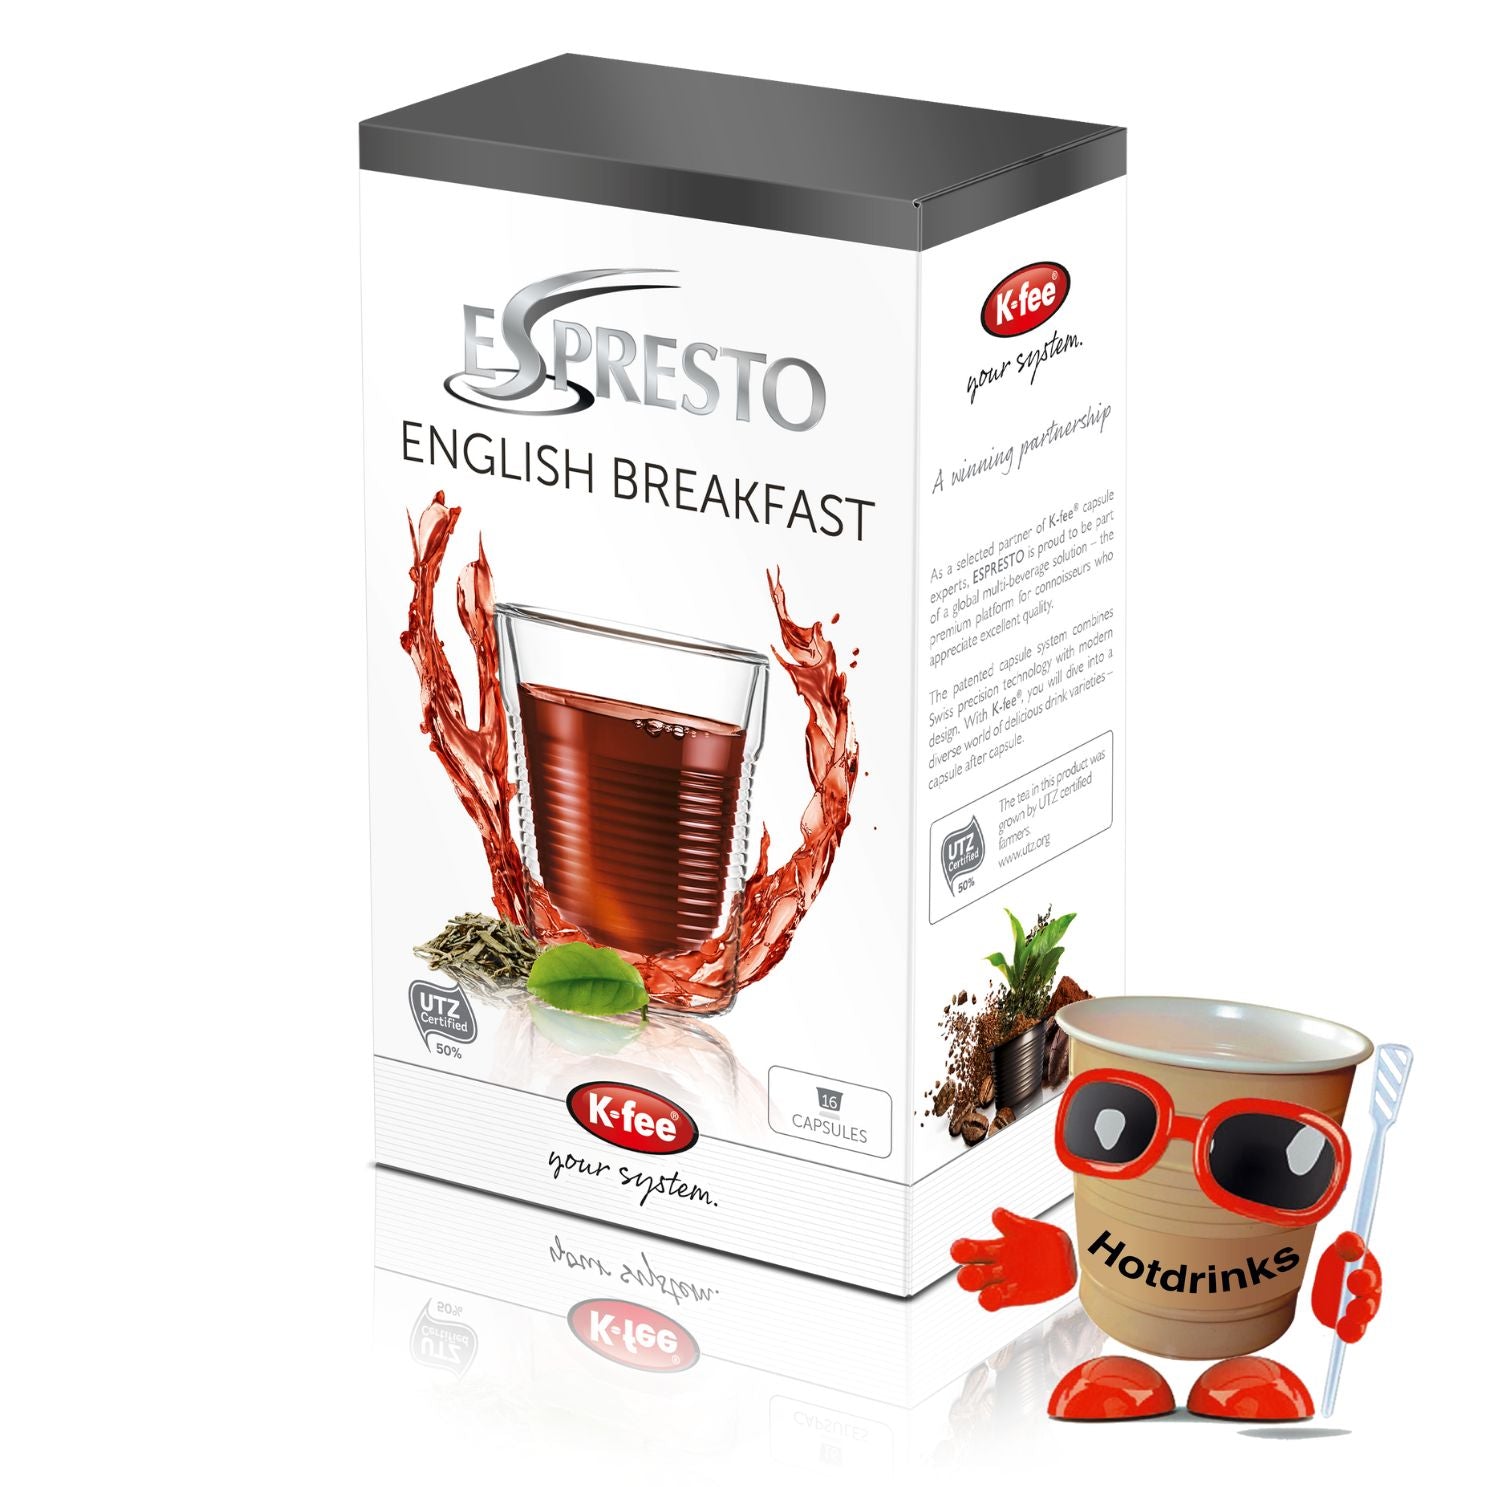 K-Fee Pods - Espresto 'English Breakfast' Tea - 16 Pods or 6 boxes of 16 Pods